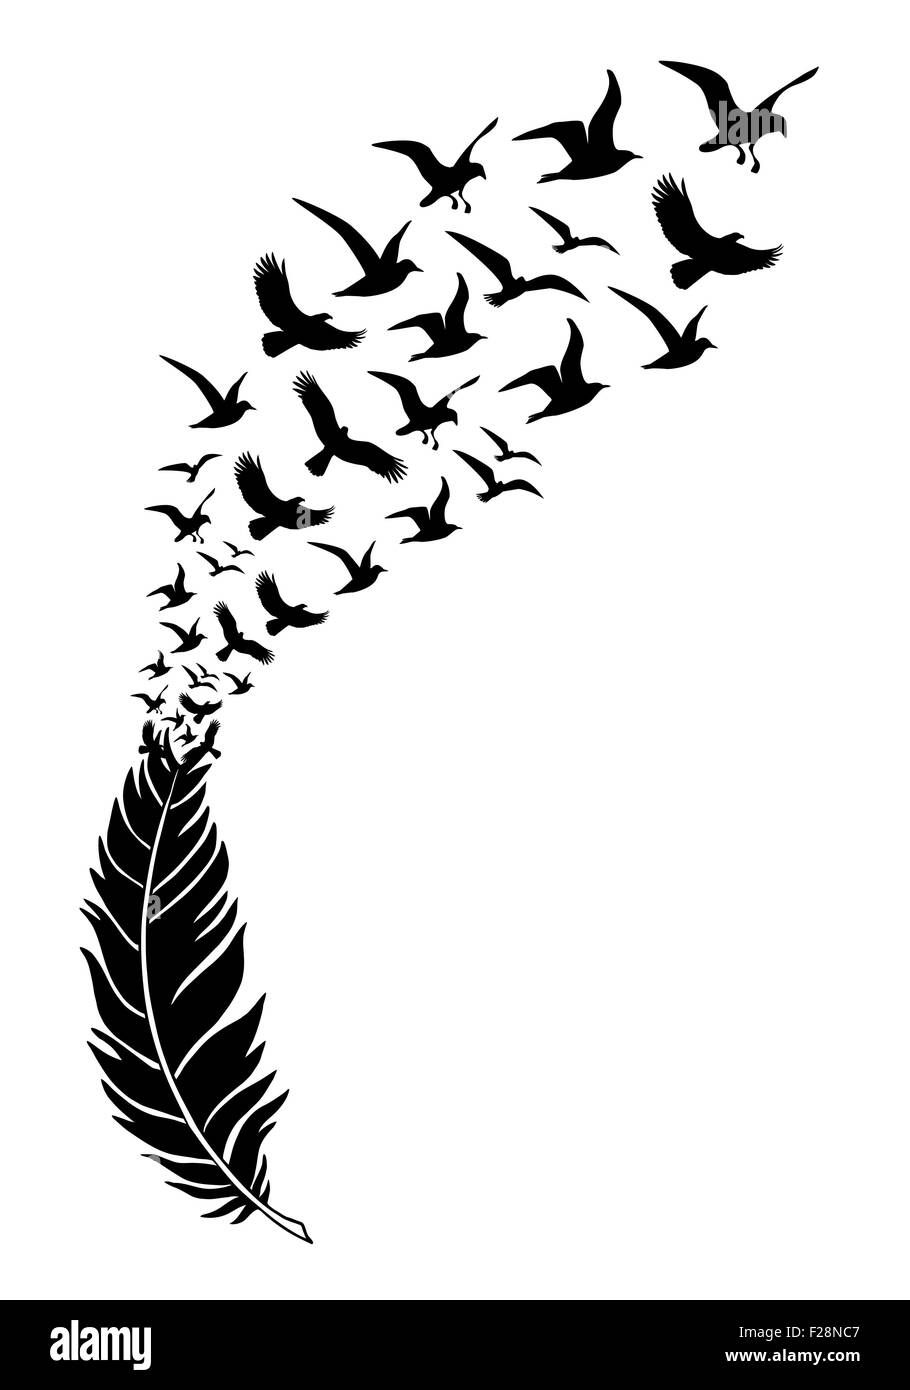 Federn mit frei fliegende Vögel, Vektor-illustration Stockfoto